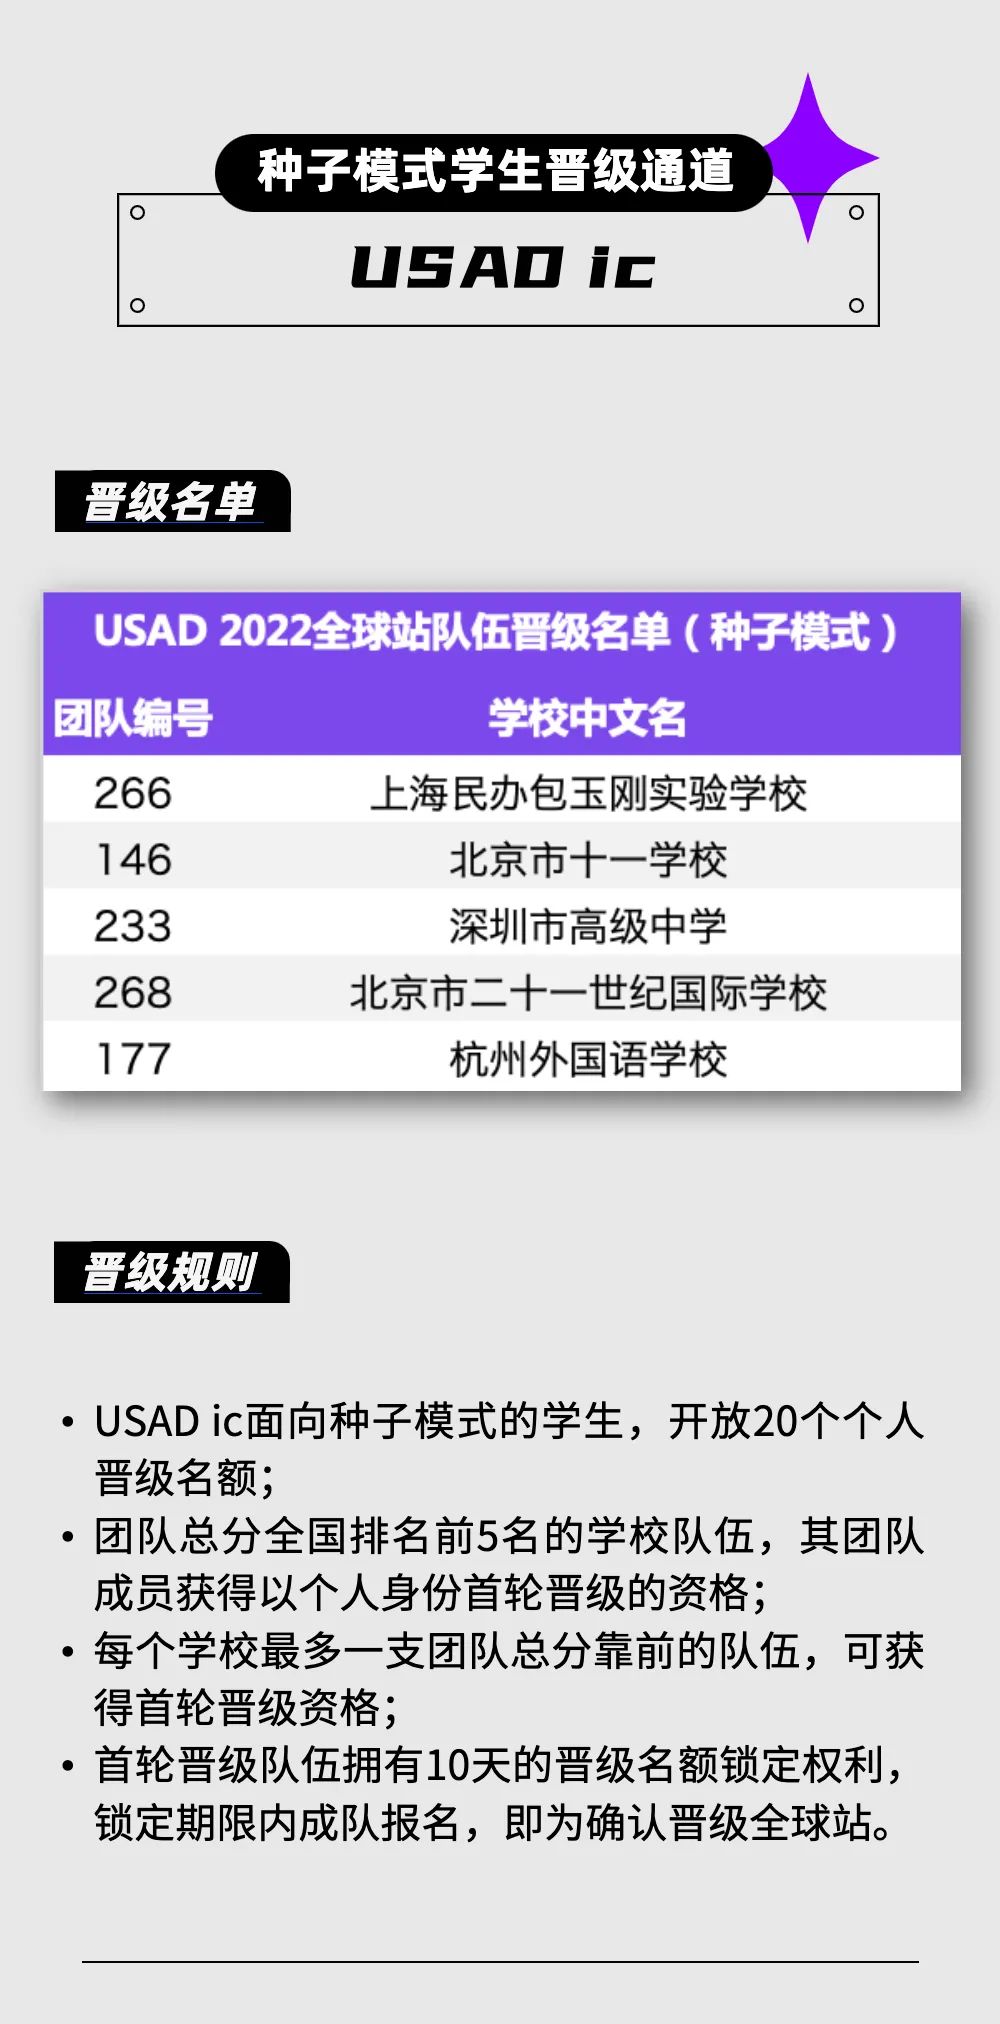 USAD 2022全球站晋级名单公布！恭喜同学们！